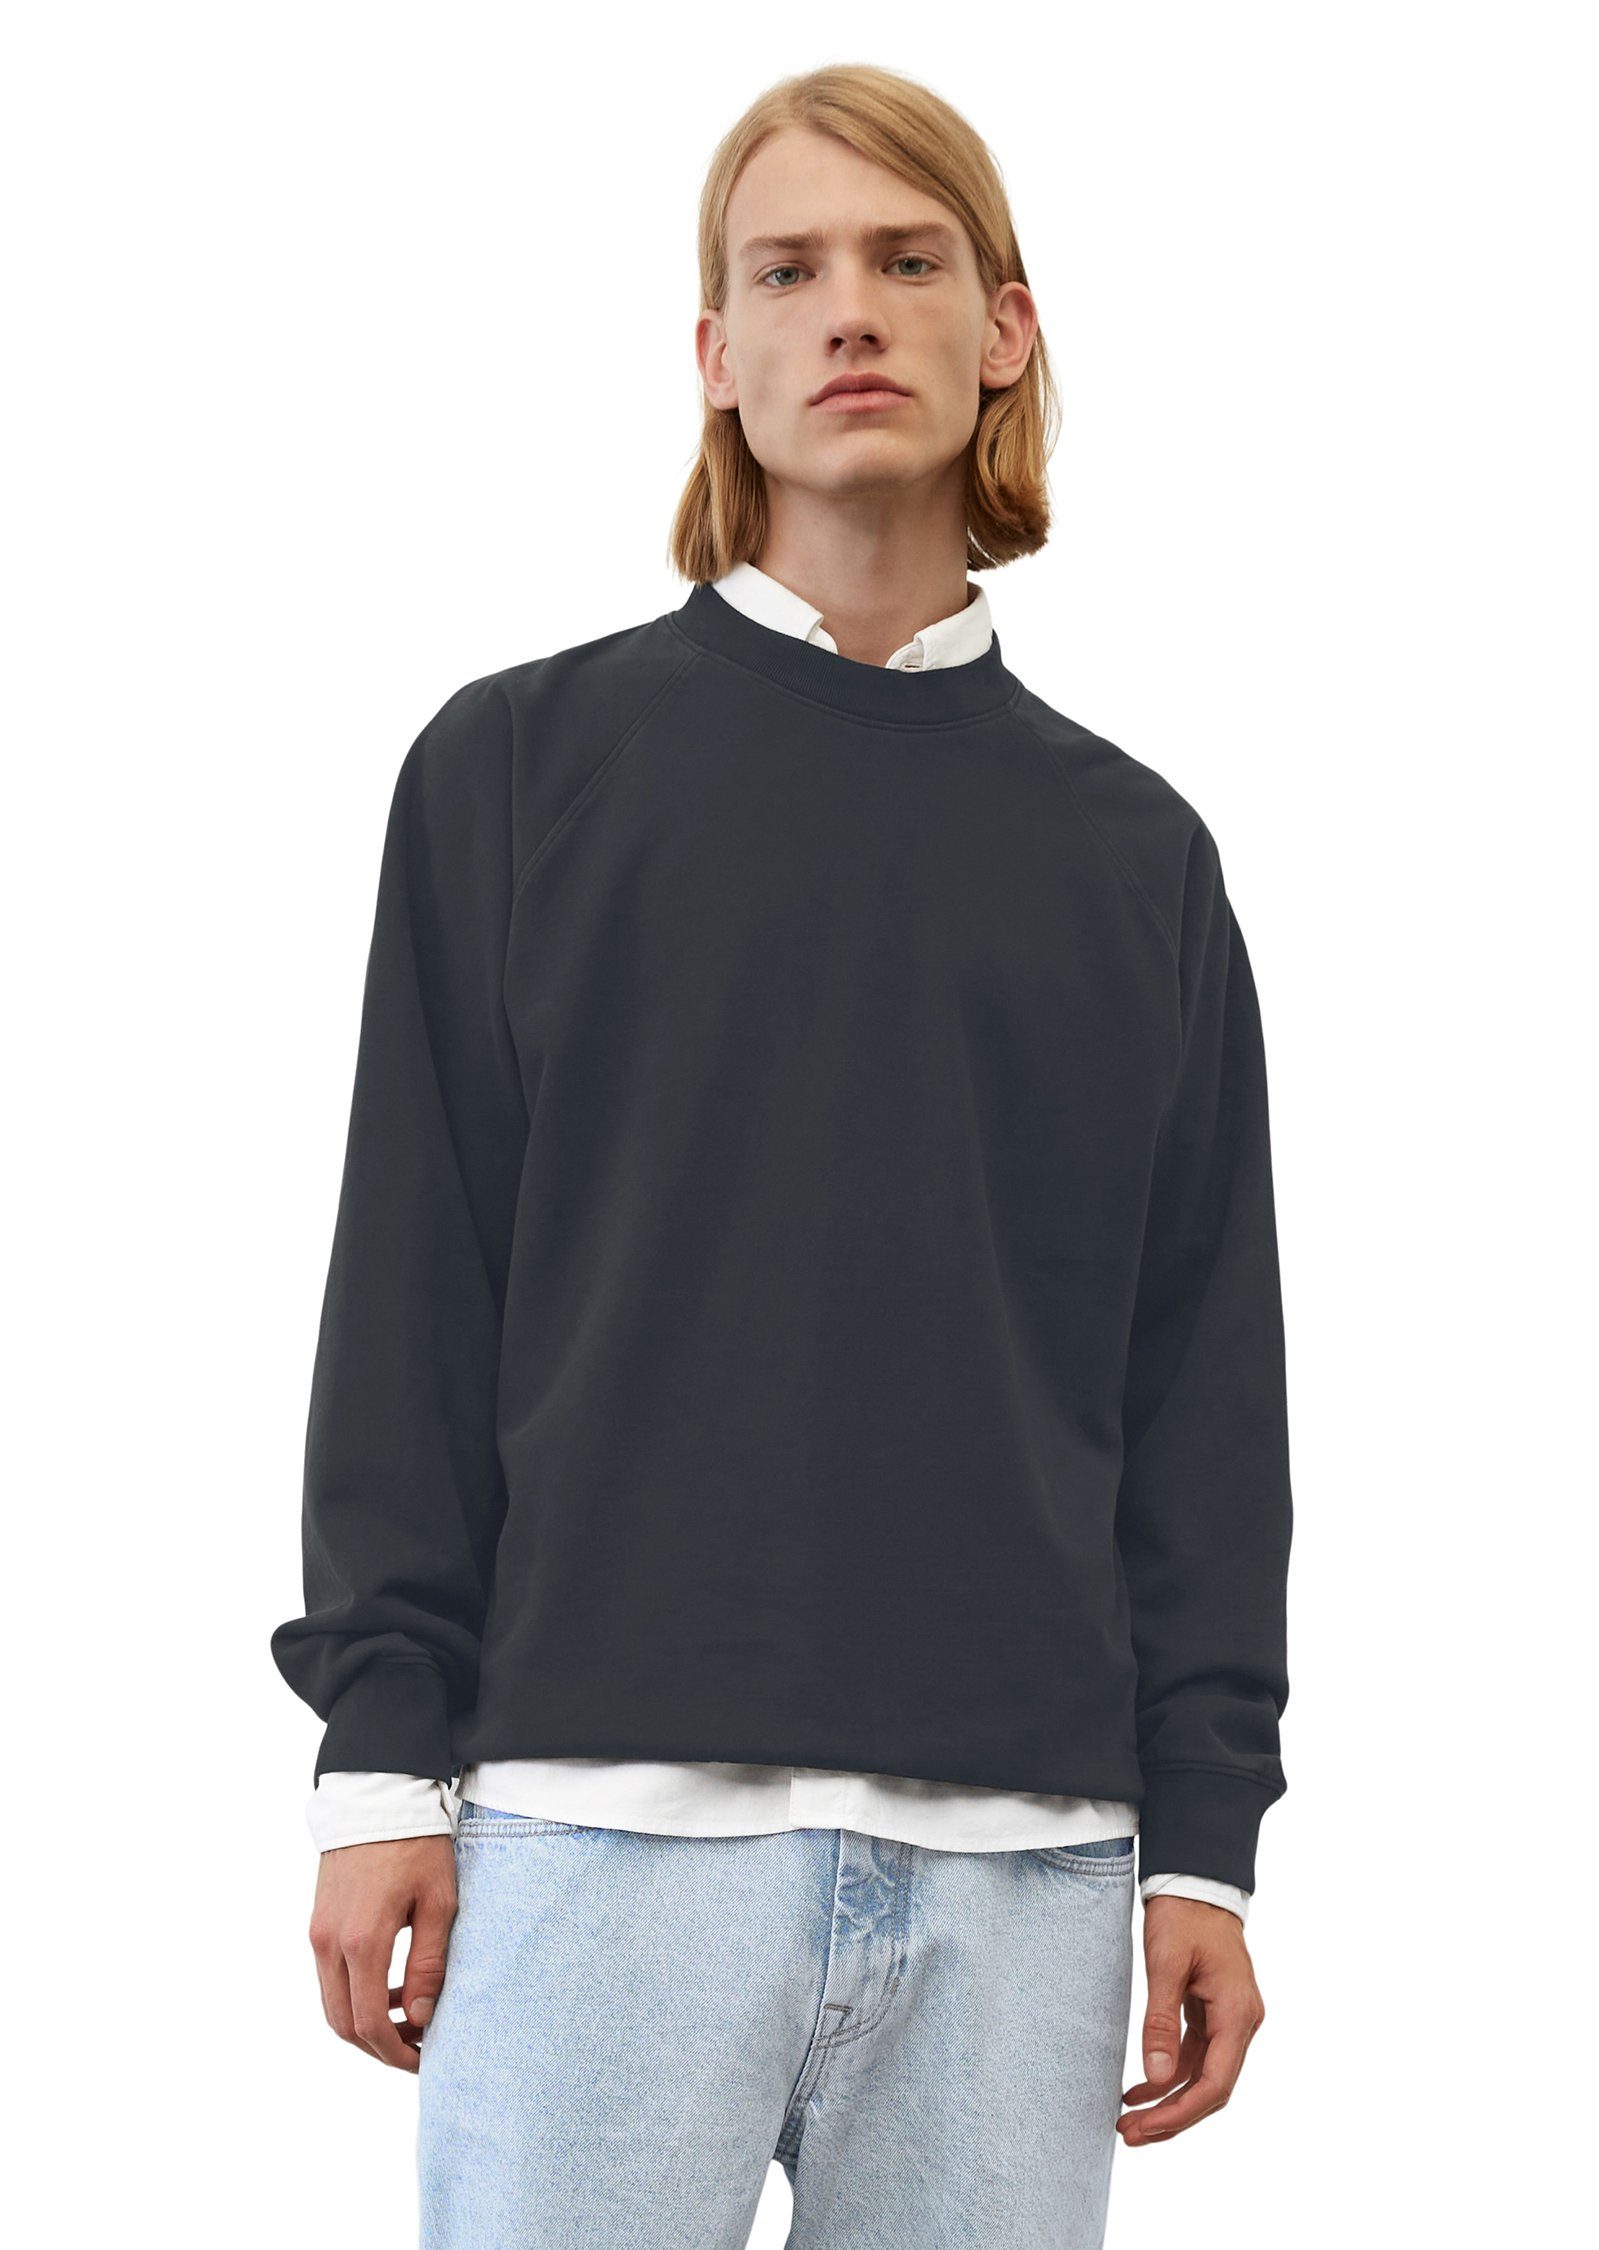 Marc O'Polo Sweatshirts online kaufen | OTTO